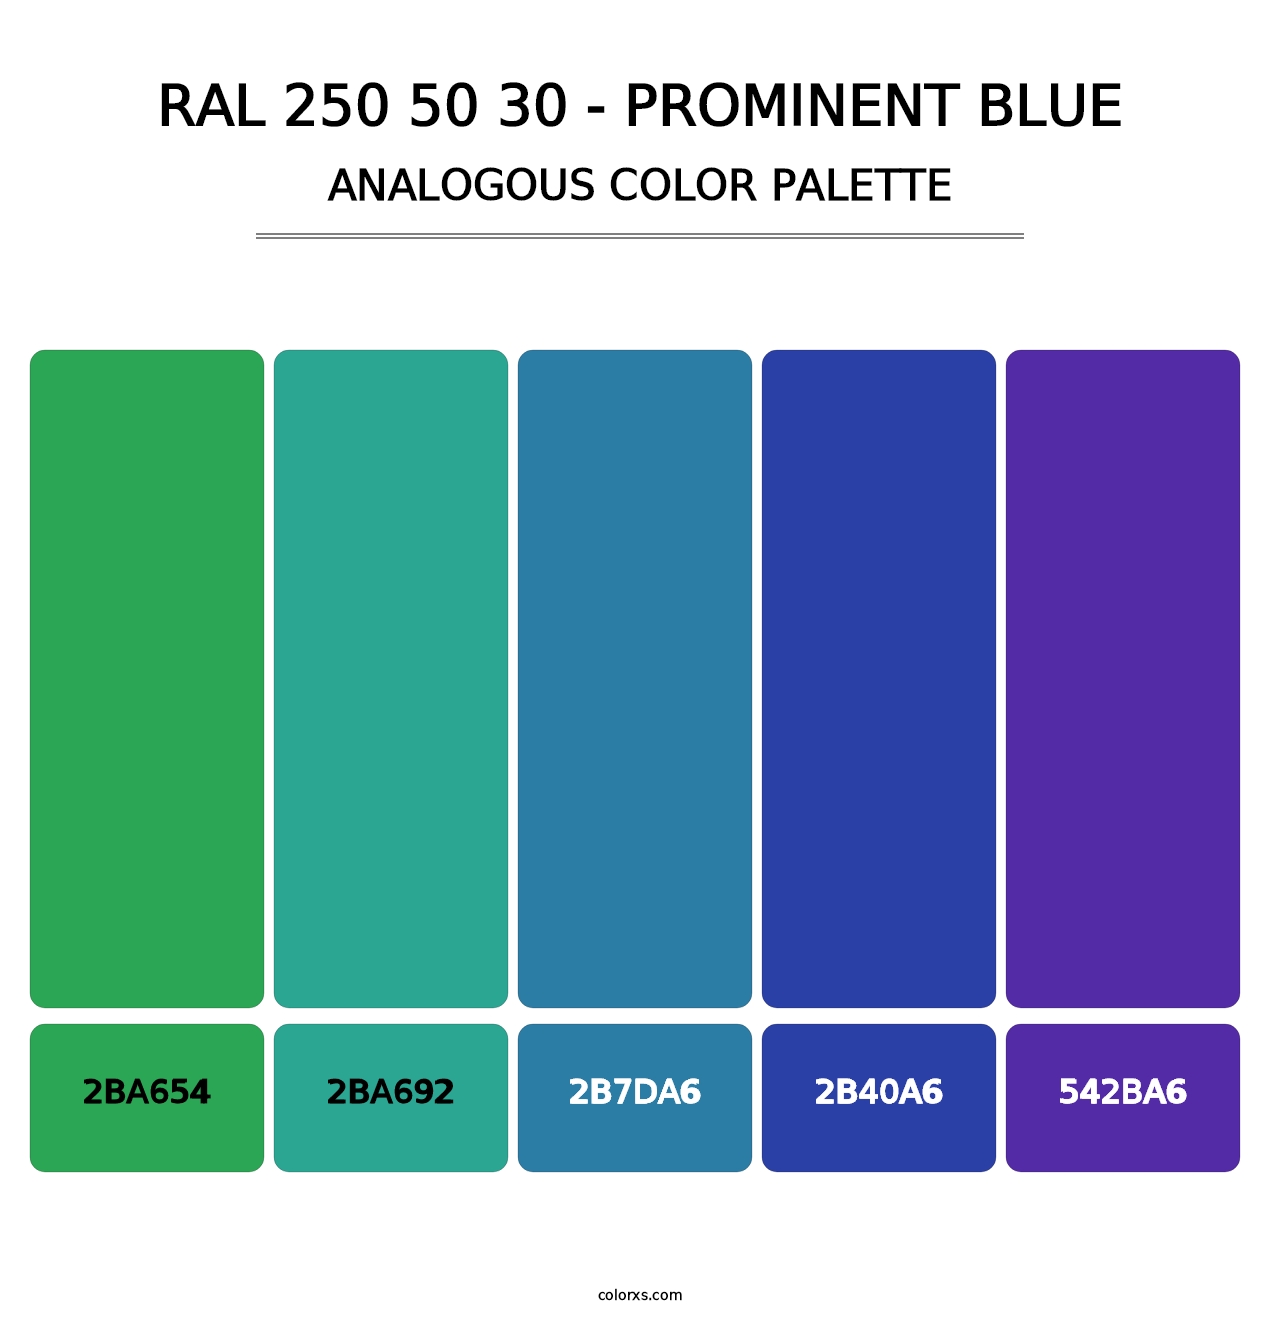 RAL 250 50 30 - Prominent Blue - Analogous Color Palette